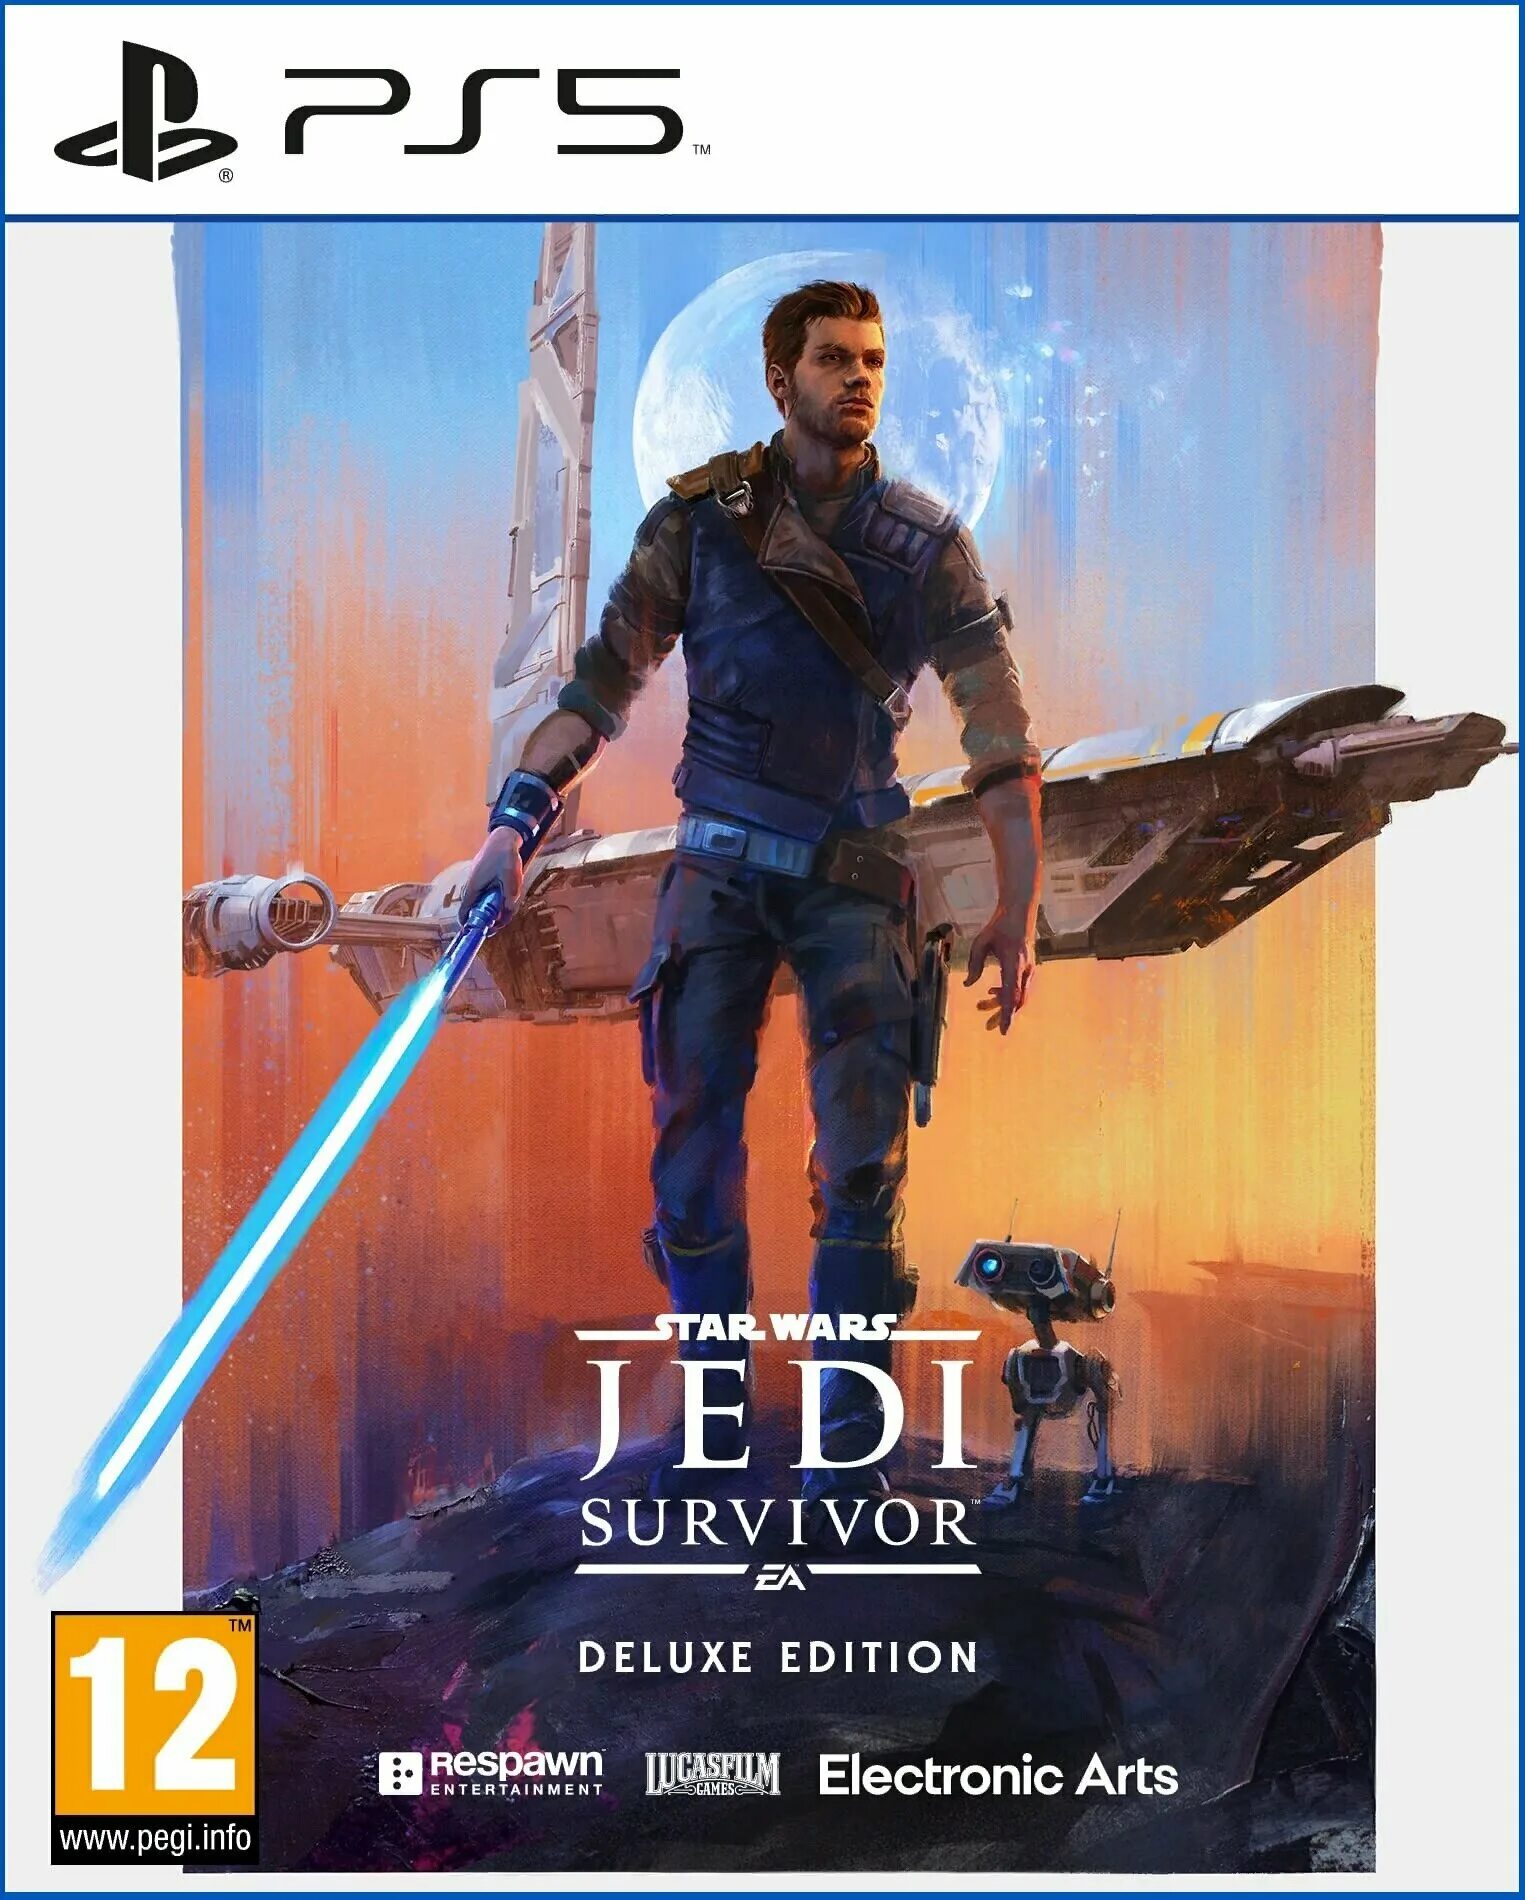 Star Wars Jedi: Survivor Xbox. Jedi Survivor ps5. Star Wars Jedi: Survivor Deluxe Edition. Star Wars Jedi: Survivor обложка. Star wars jedi survivor deluxe